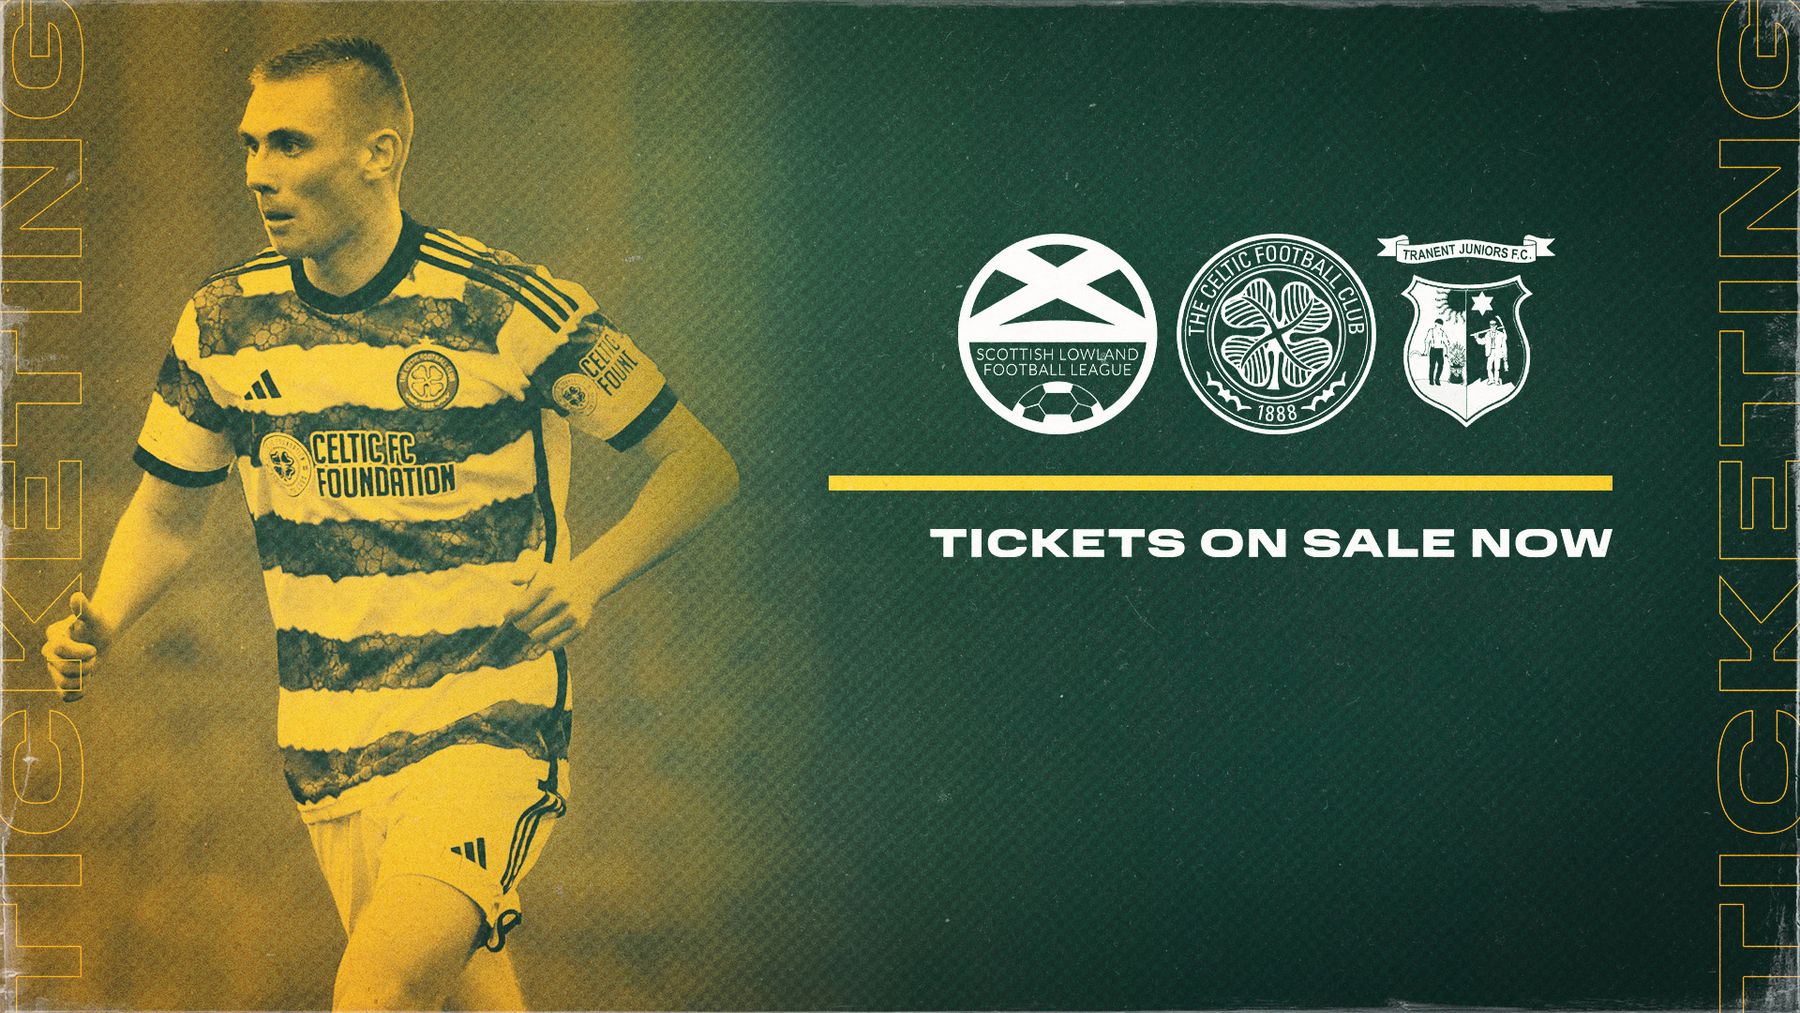 Celtic FC B v Tranent – Buy tickets online now